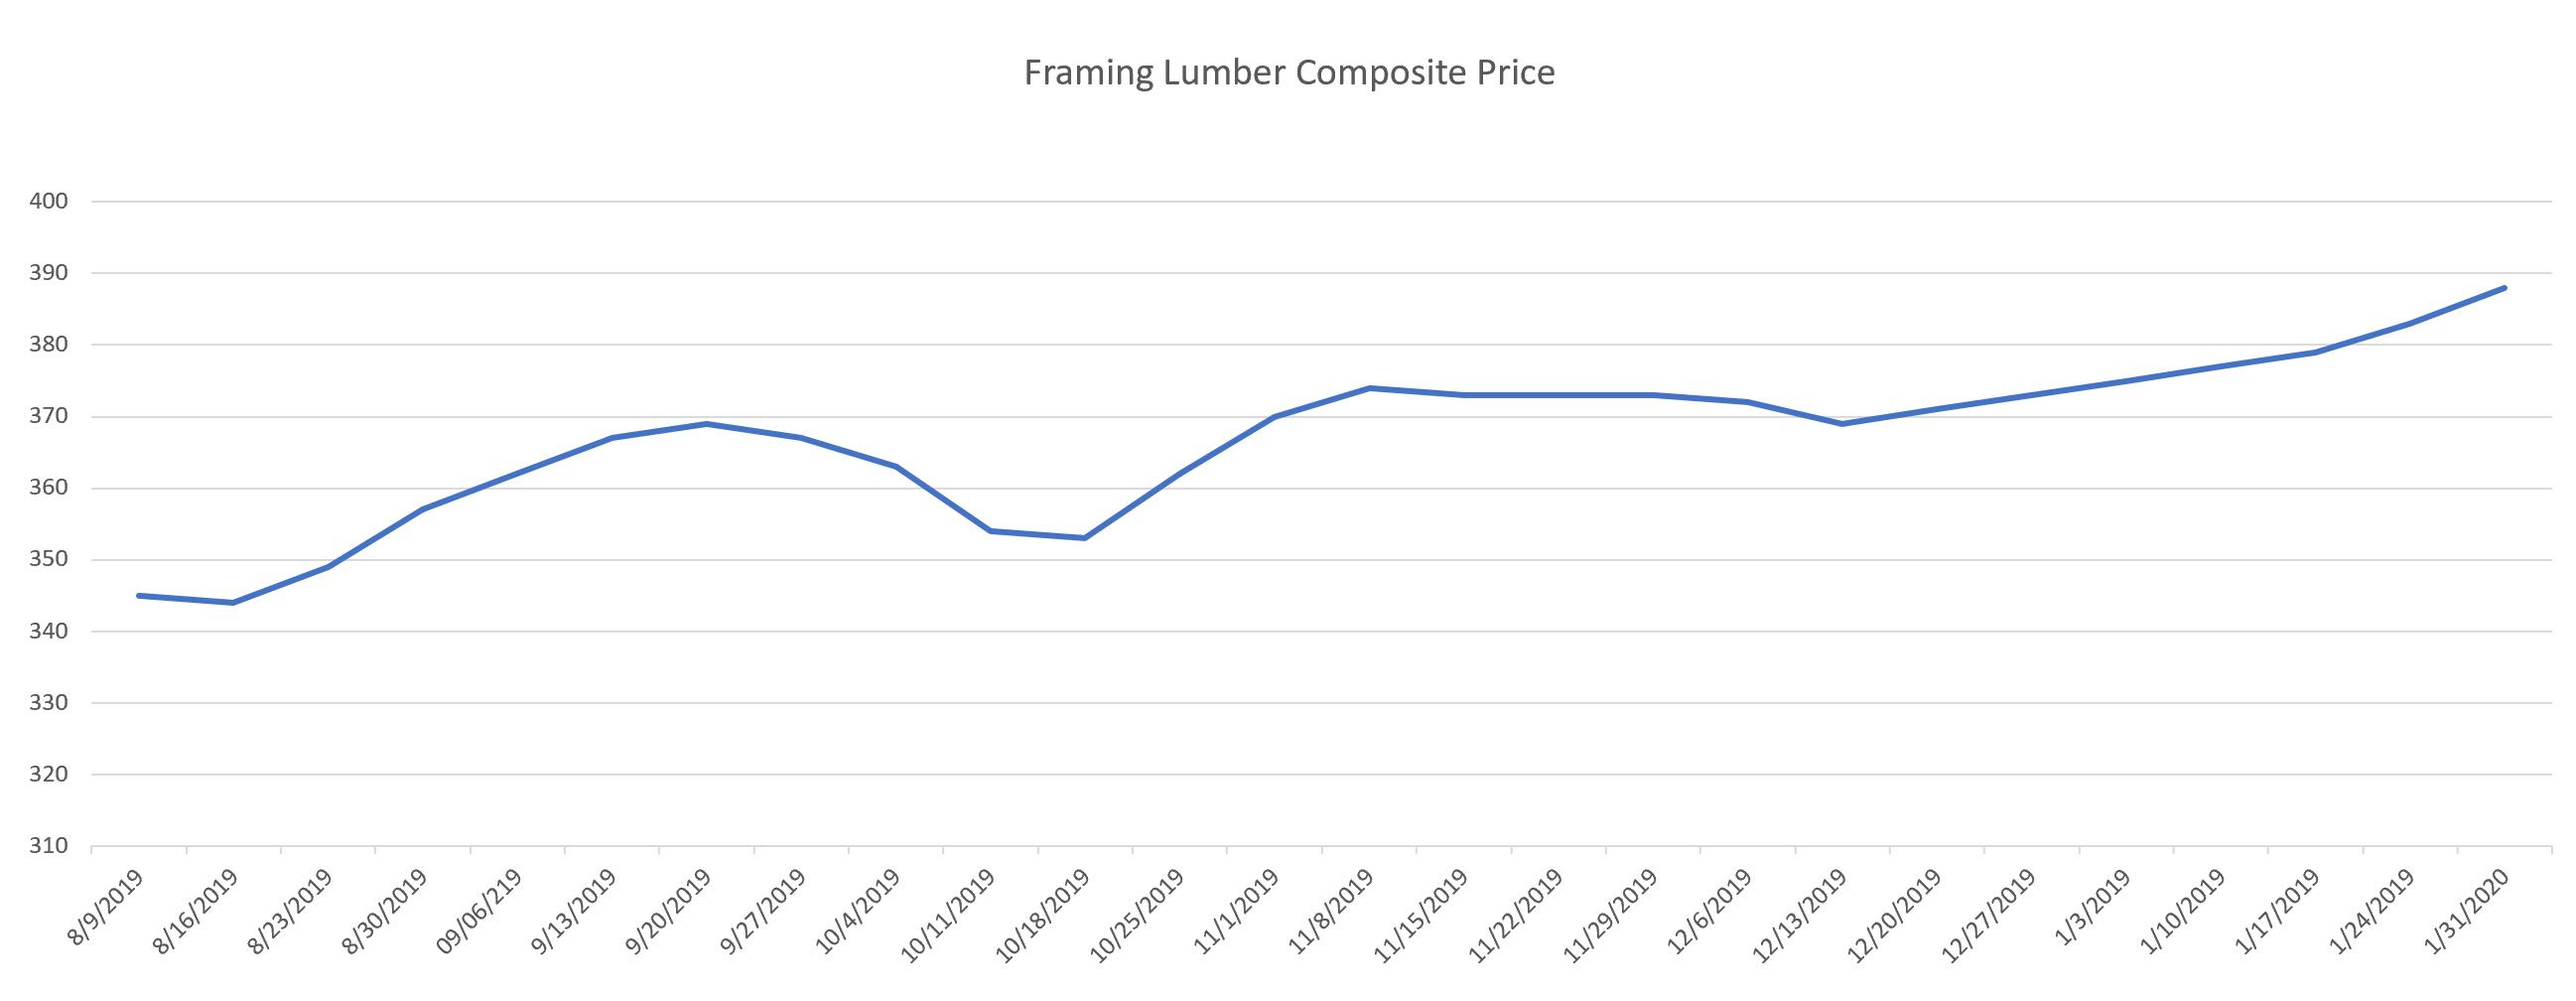 Framing Lumber Composite Price